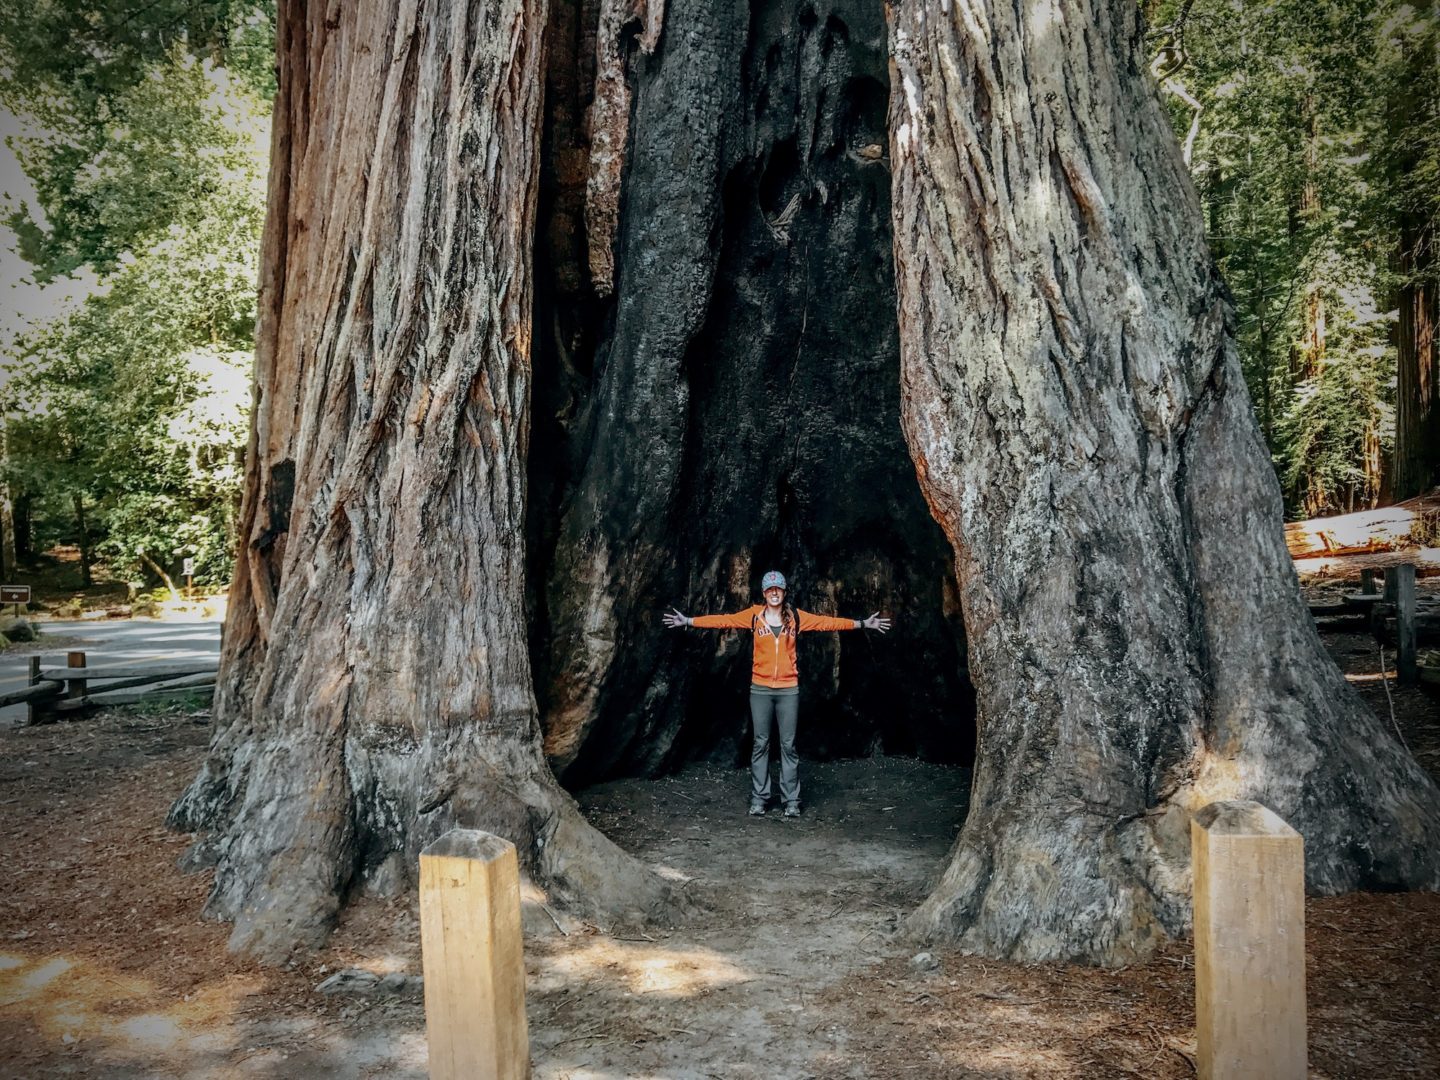 Katy inside of tree - Big Basin Redwoods State Park